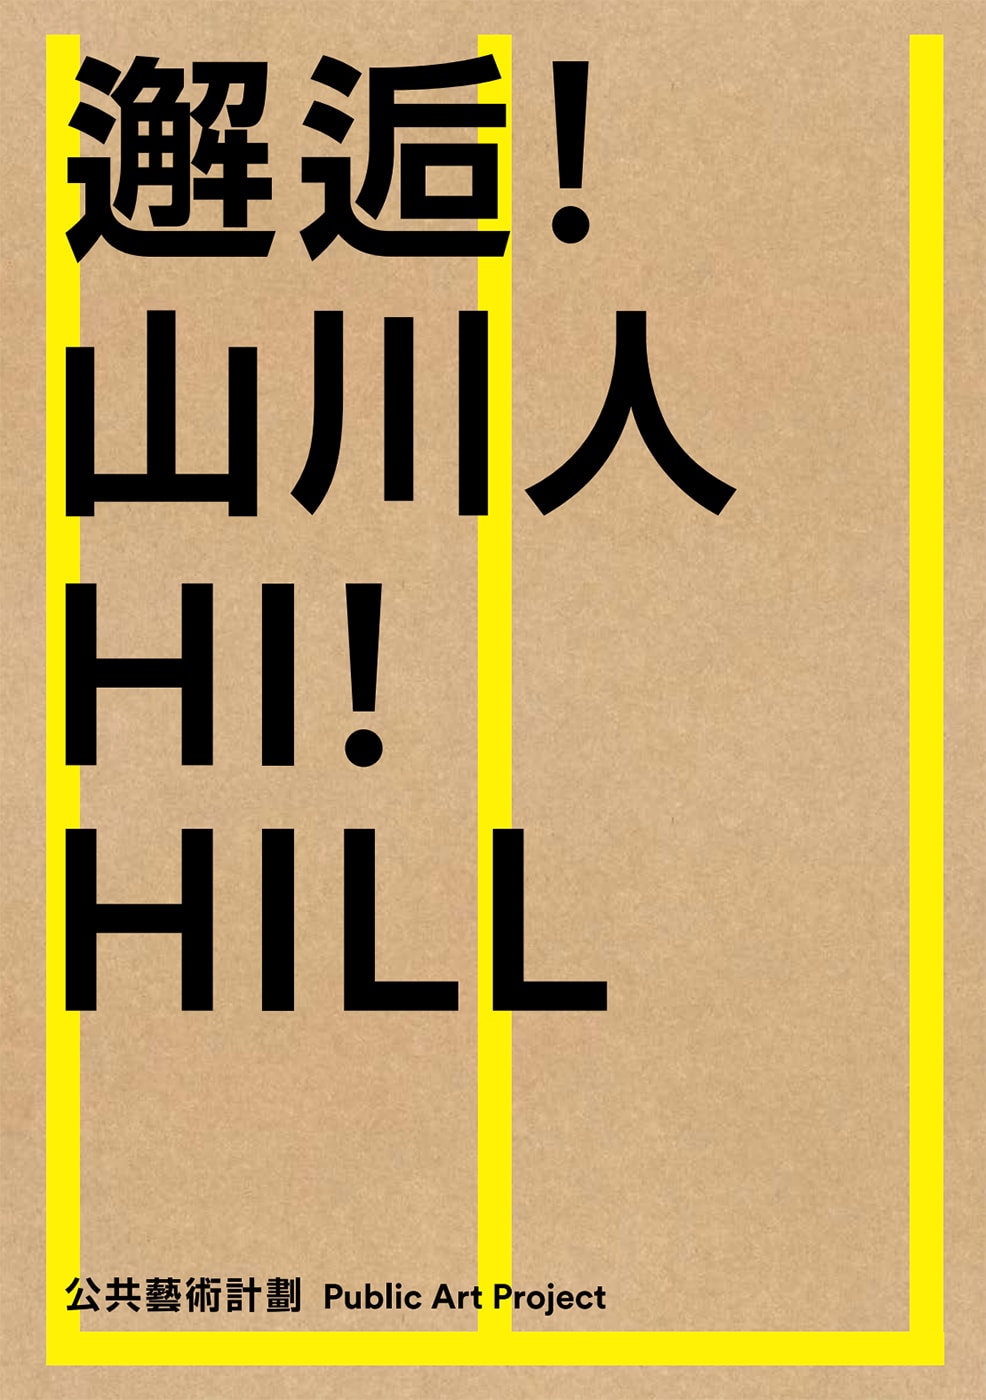 Leung Chi Wo participates in “Hi! Hill” public art project at Chuen Lung Village, Tsuen Wan, Hong Kong